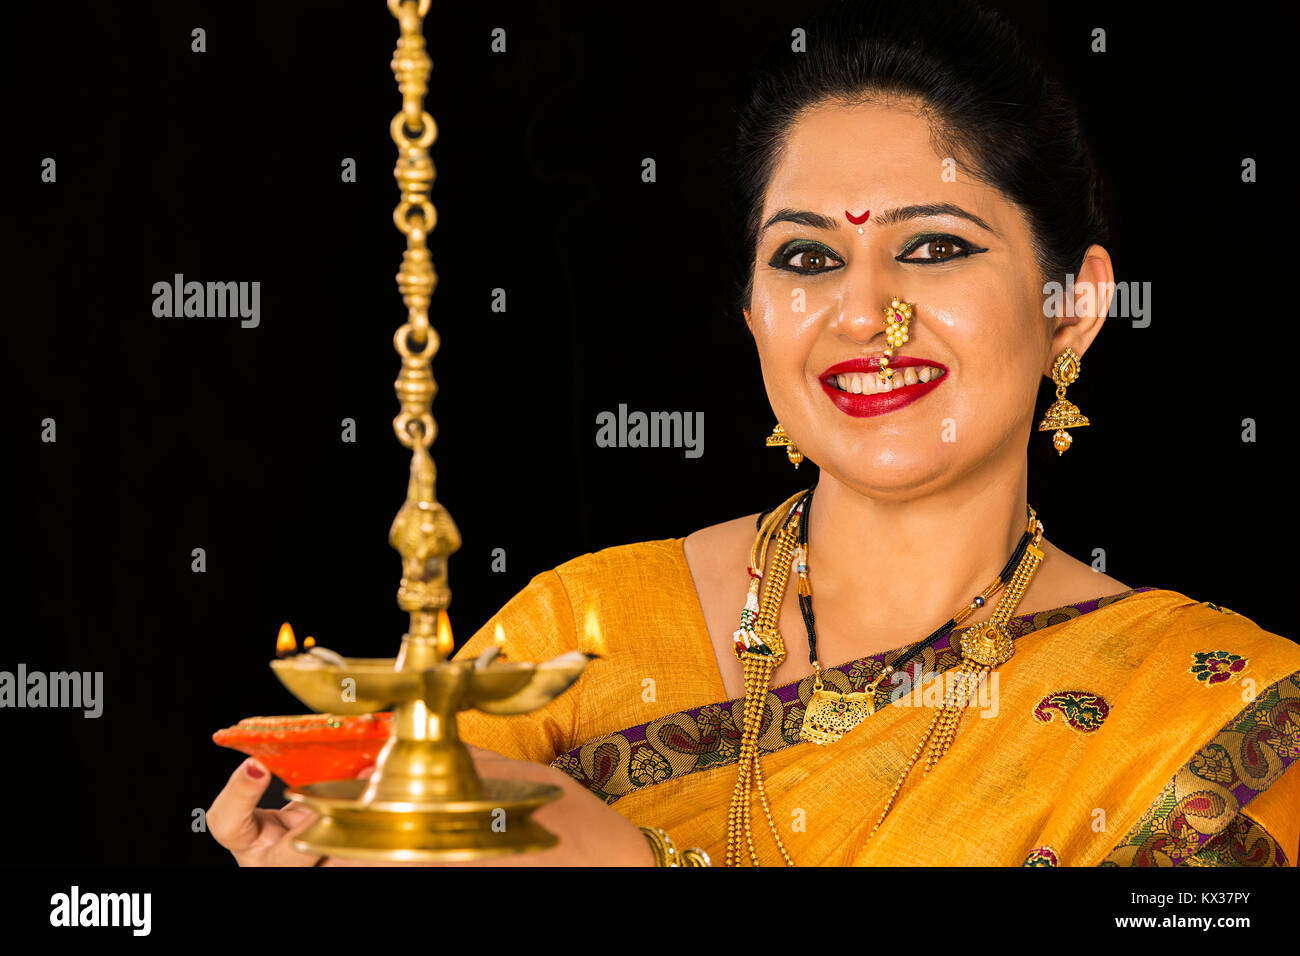 Indian Marathi Adult woman burning oil lamp In diwali festival Stock Photo